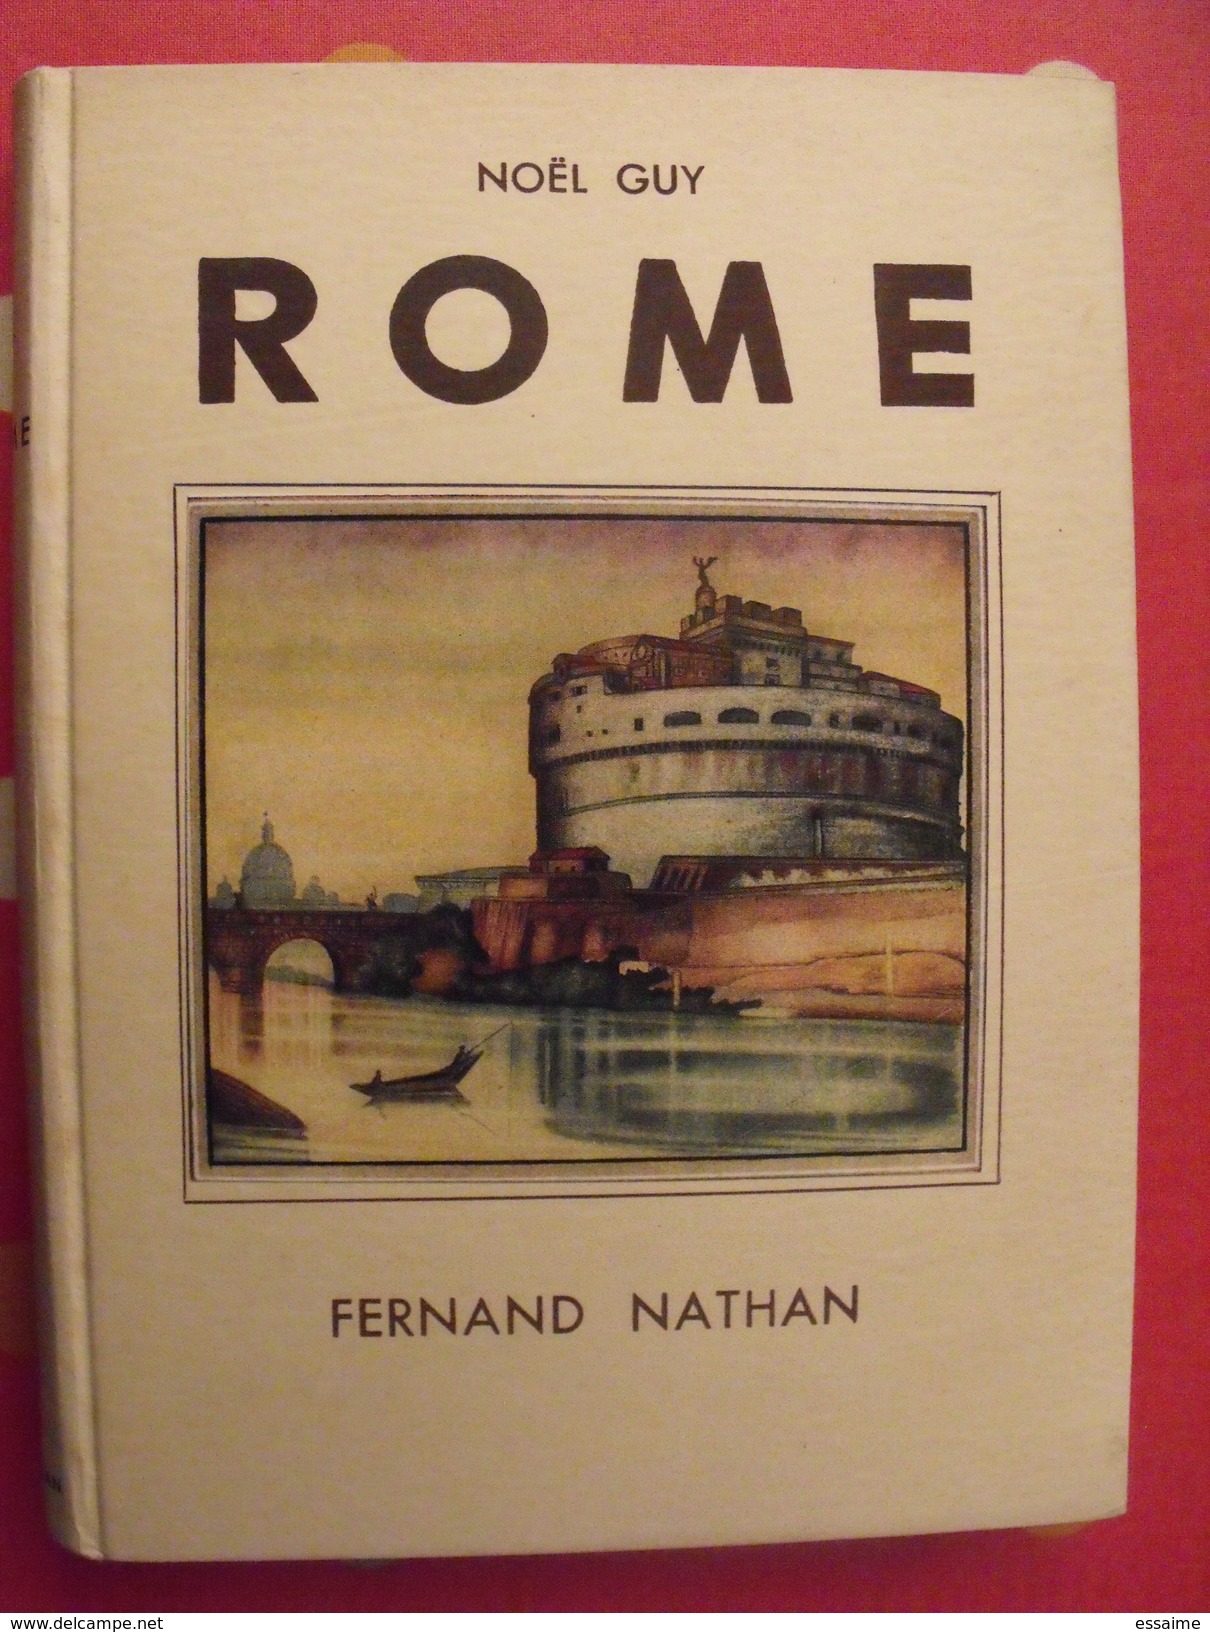 Rome. Noël Guy. Fernand Nathan 1934. Illust Marilac - Non Classificati